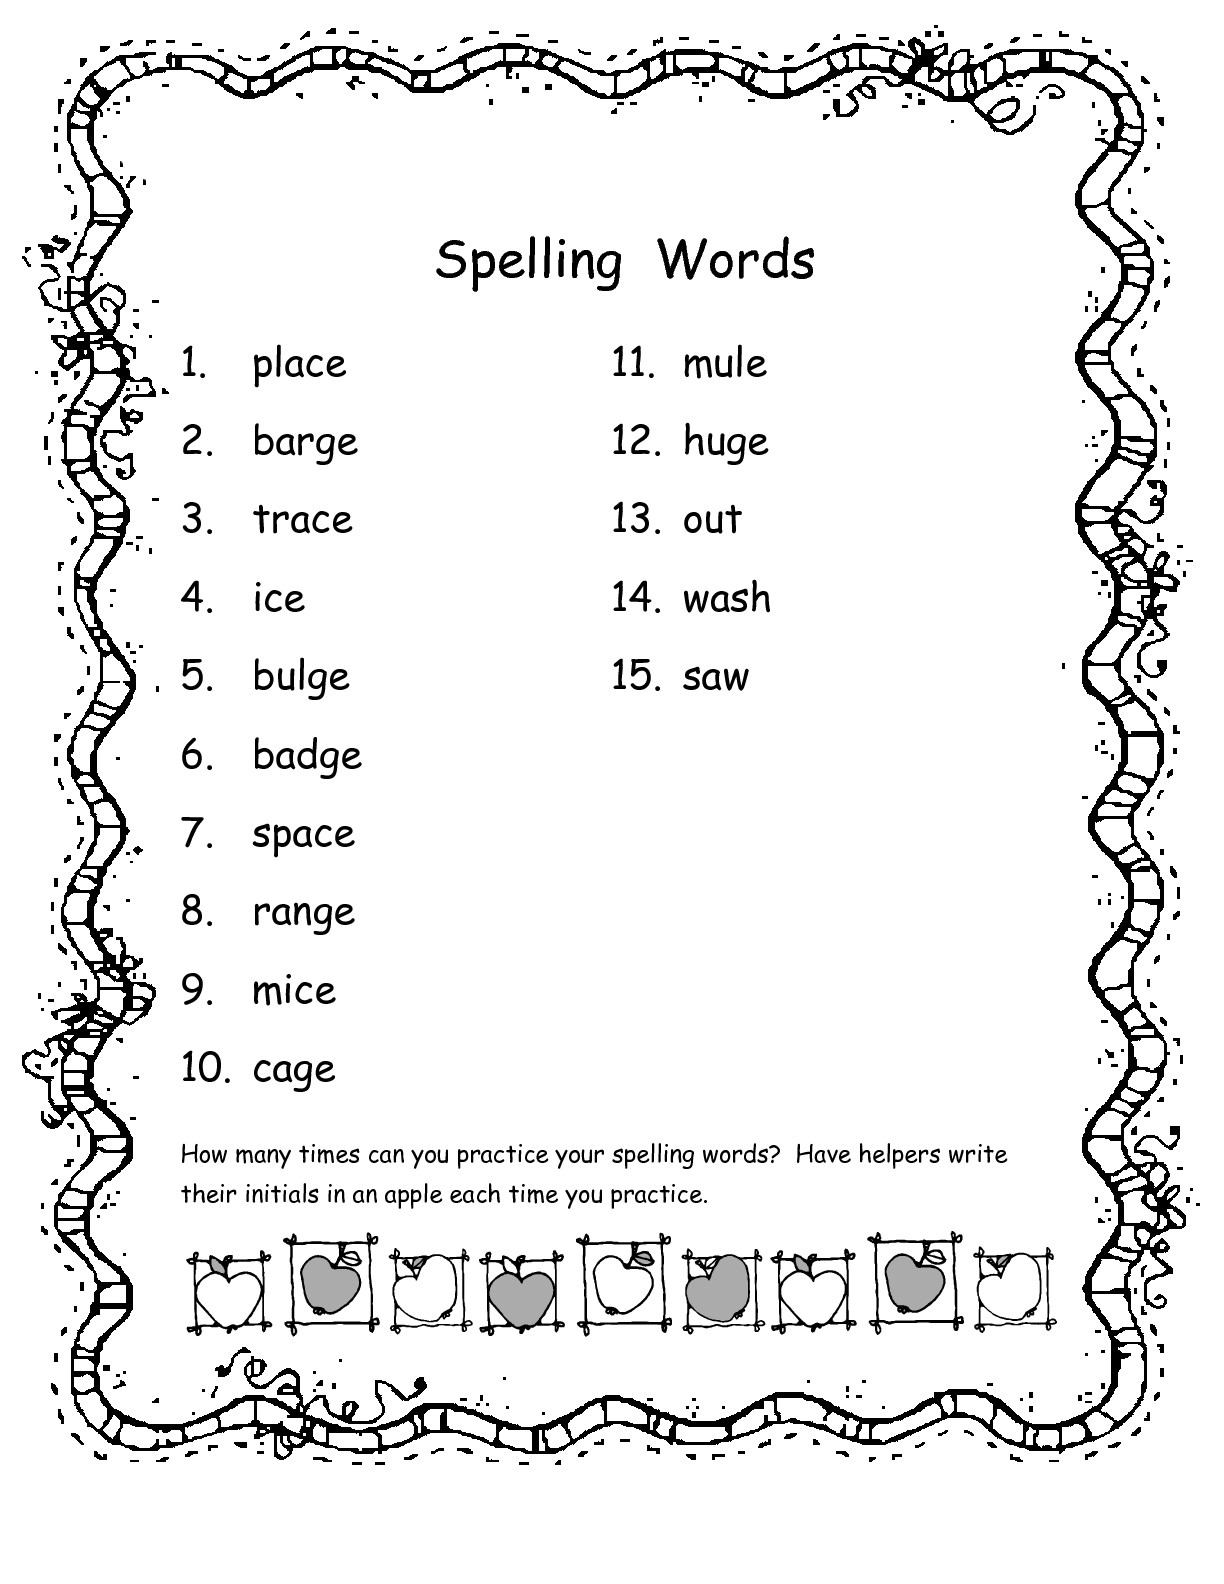 2nd-grade-spelling-words-200-spelling-words-list-for-second-graders